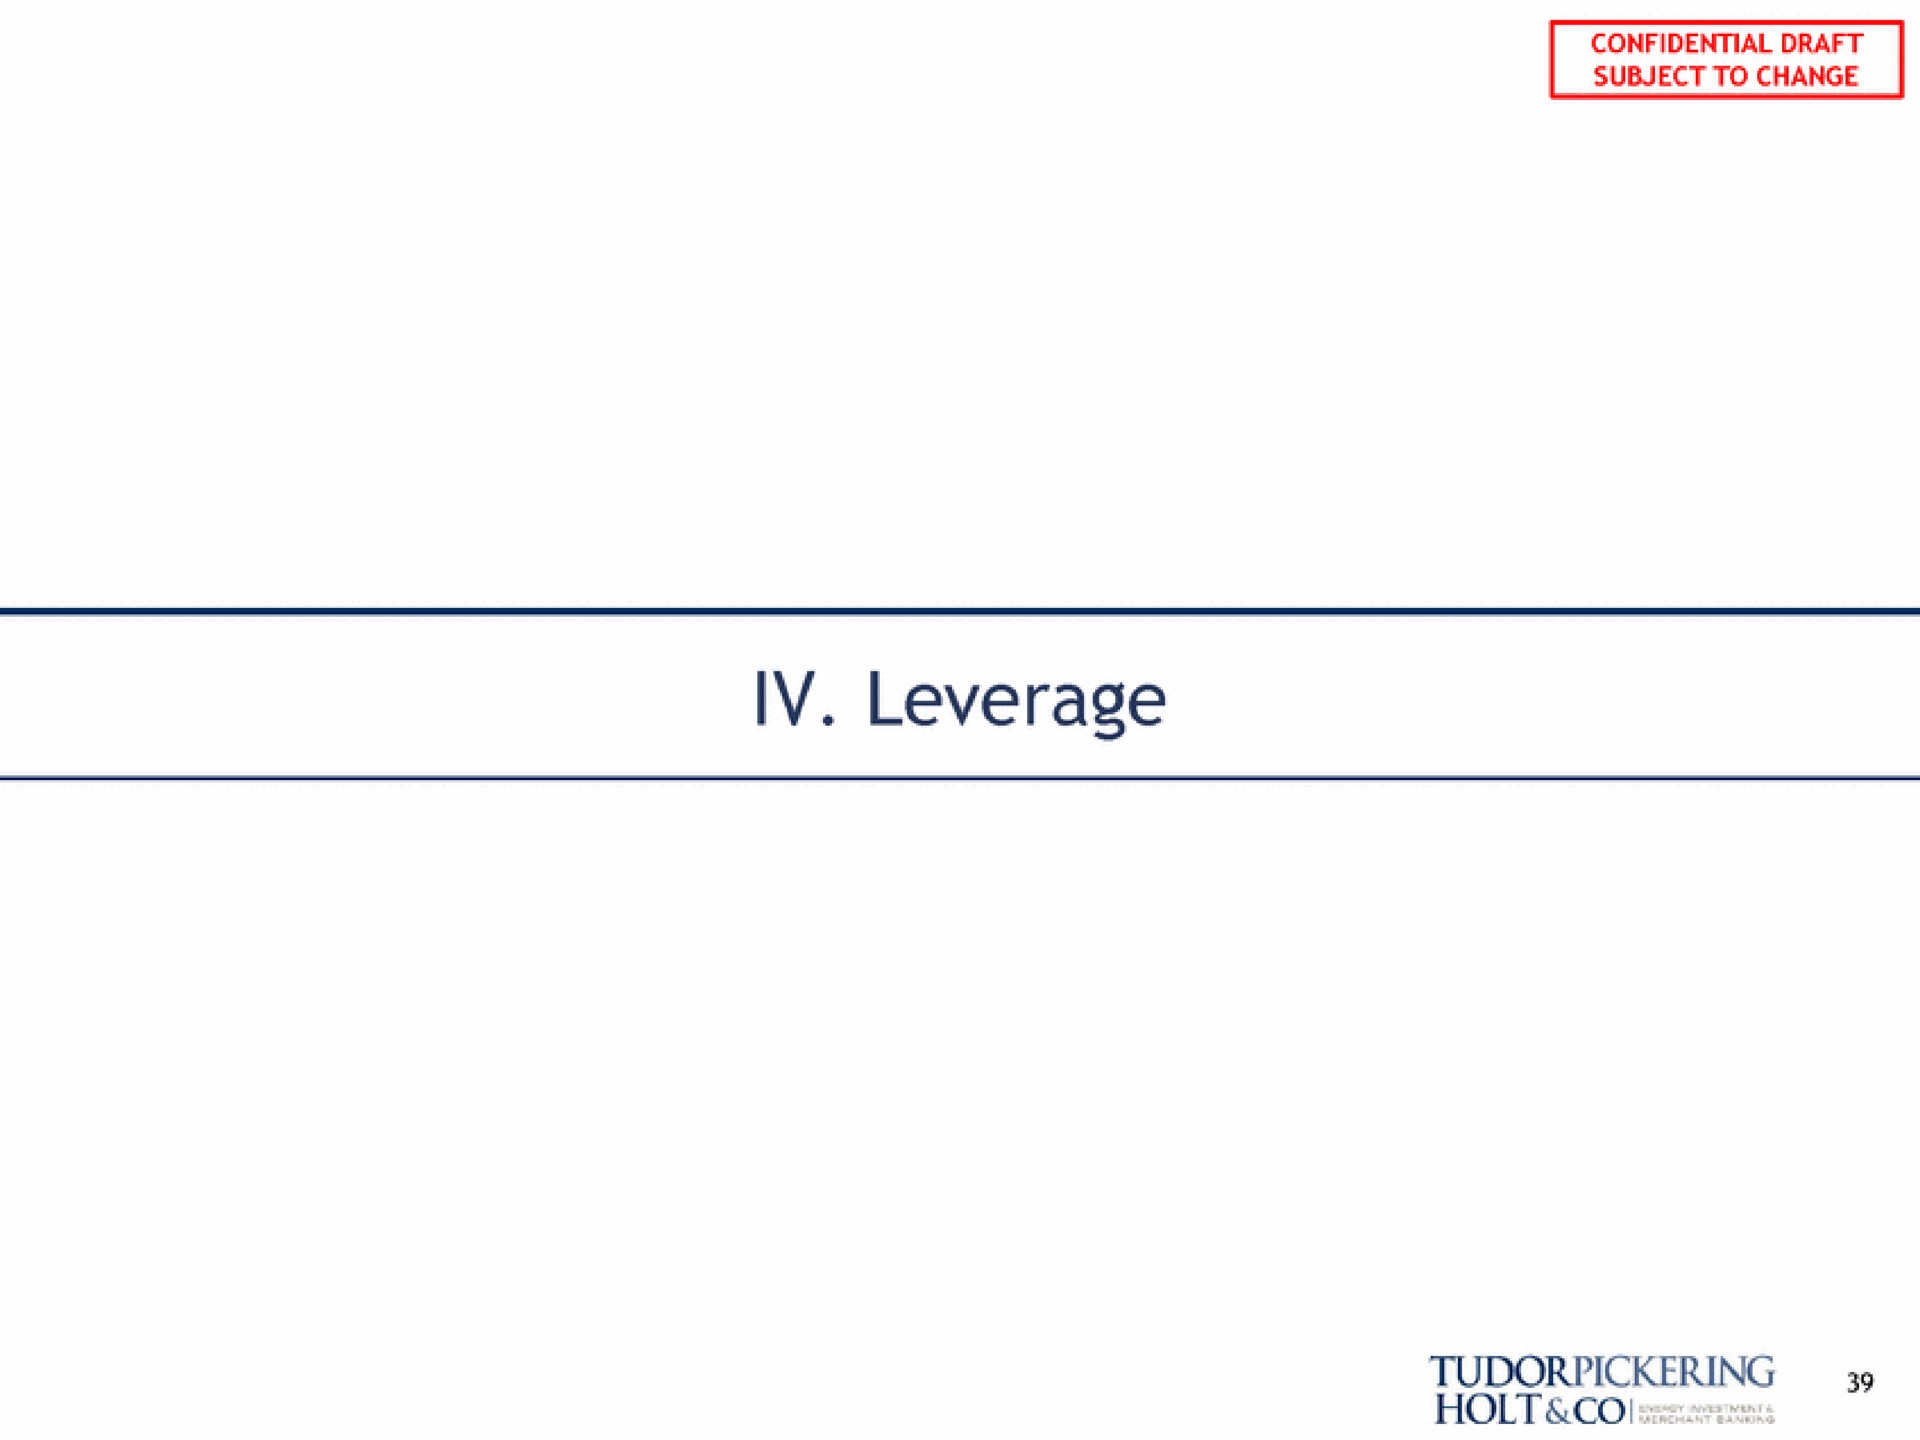 leverage | Tudor, Pickering, Holt & Co